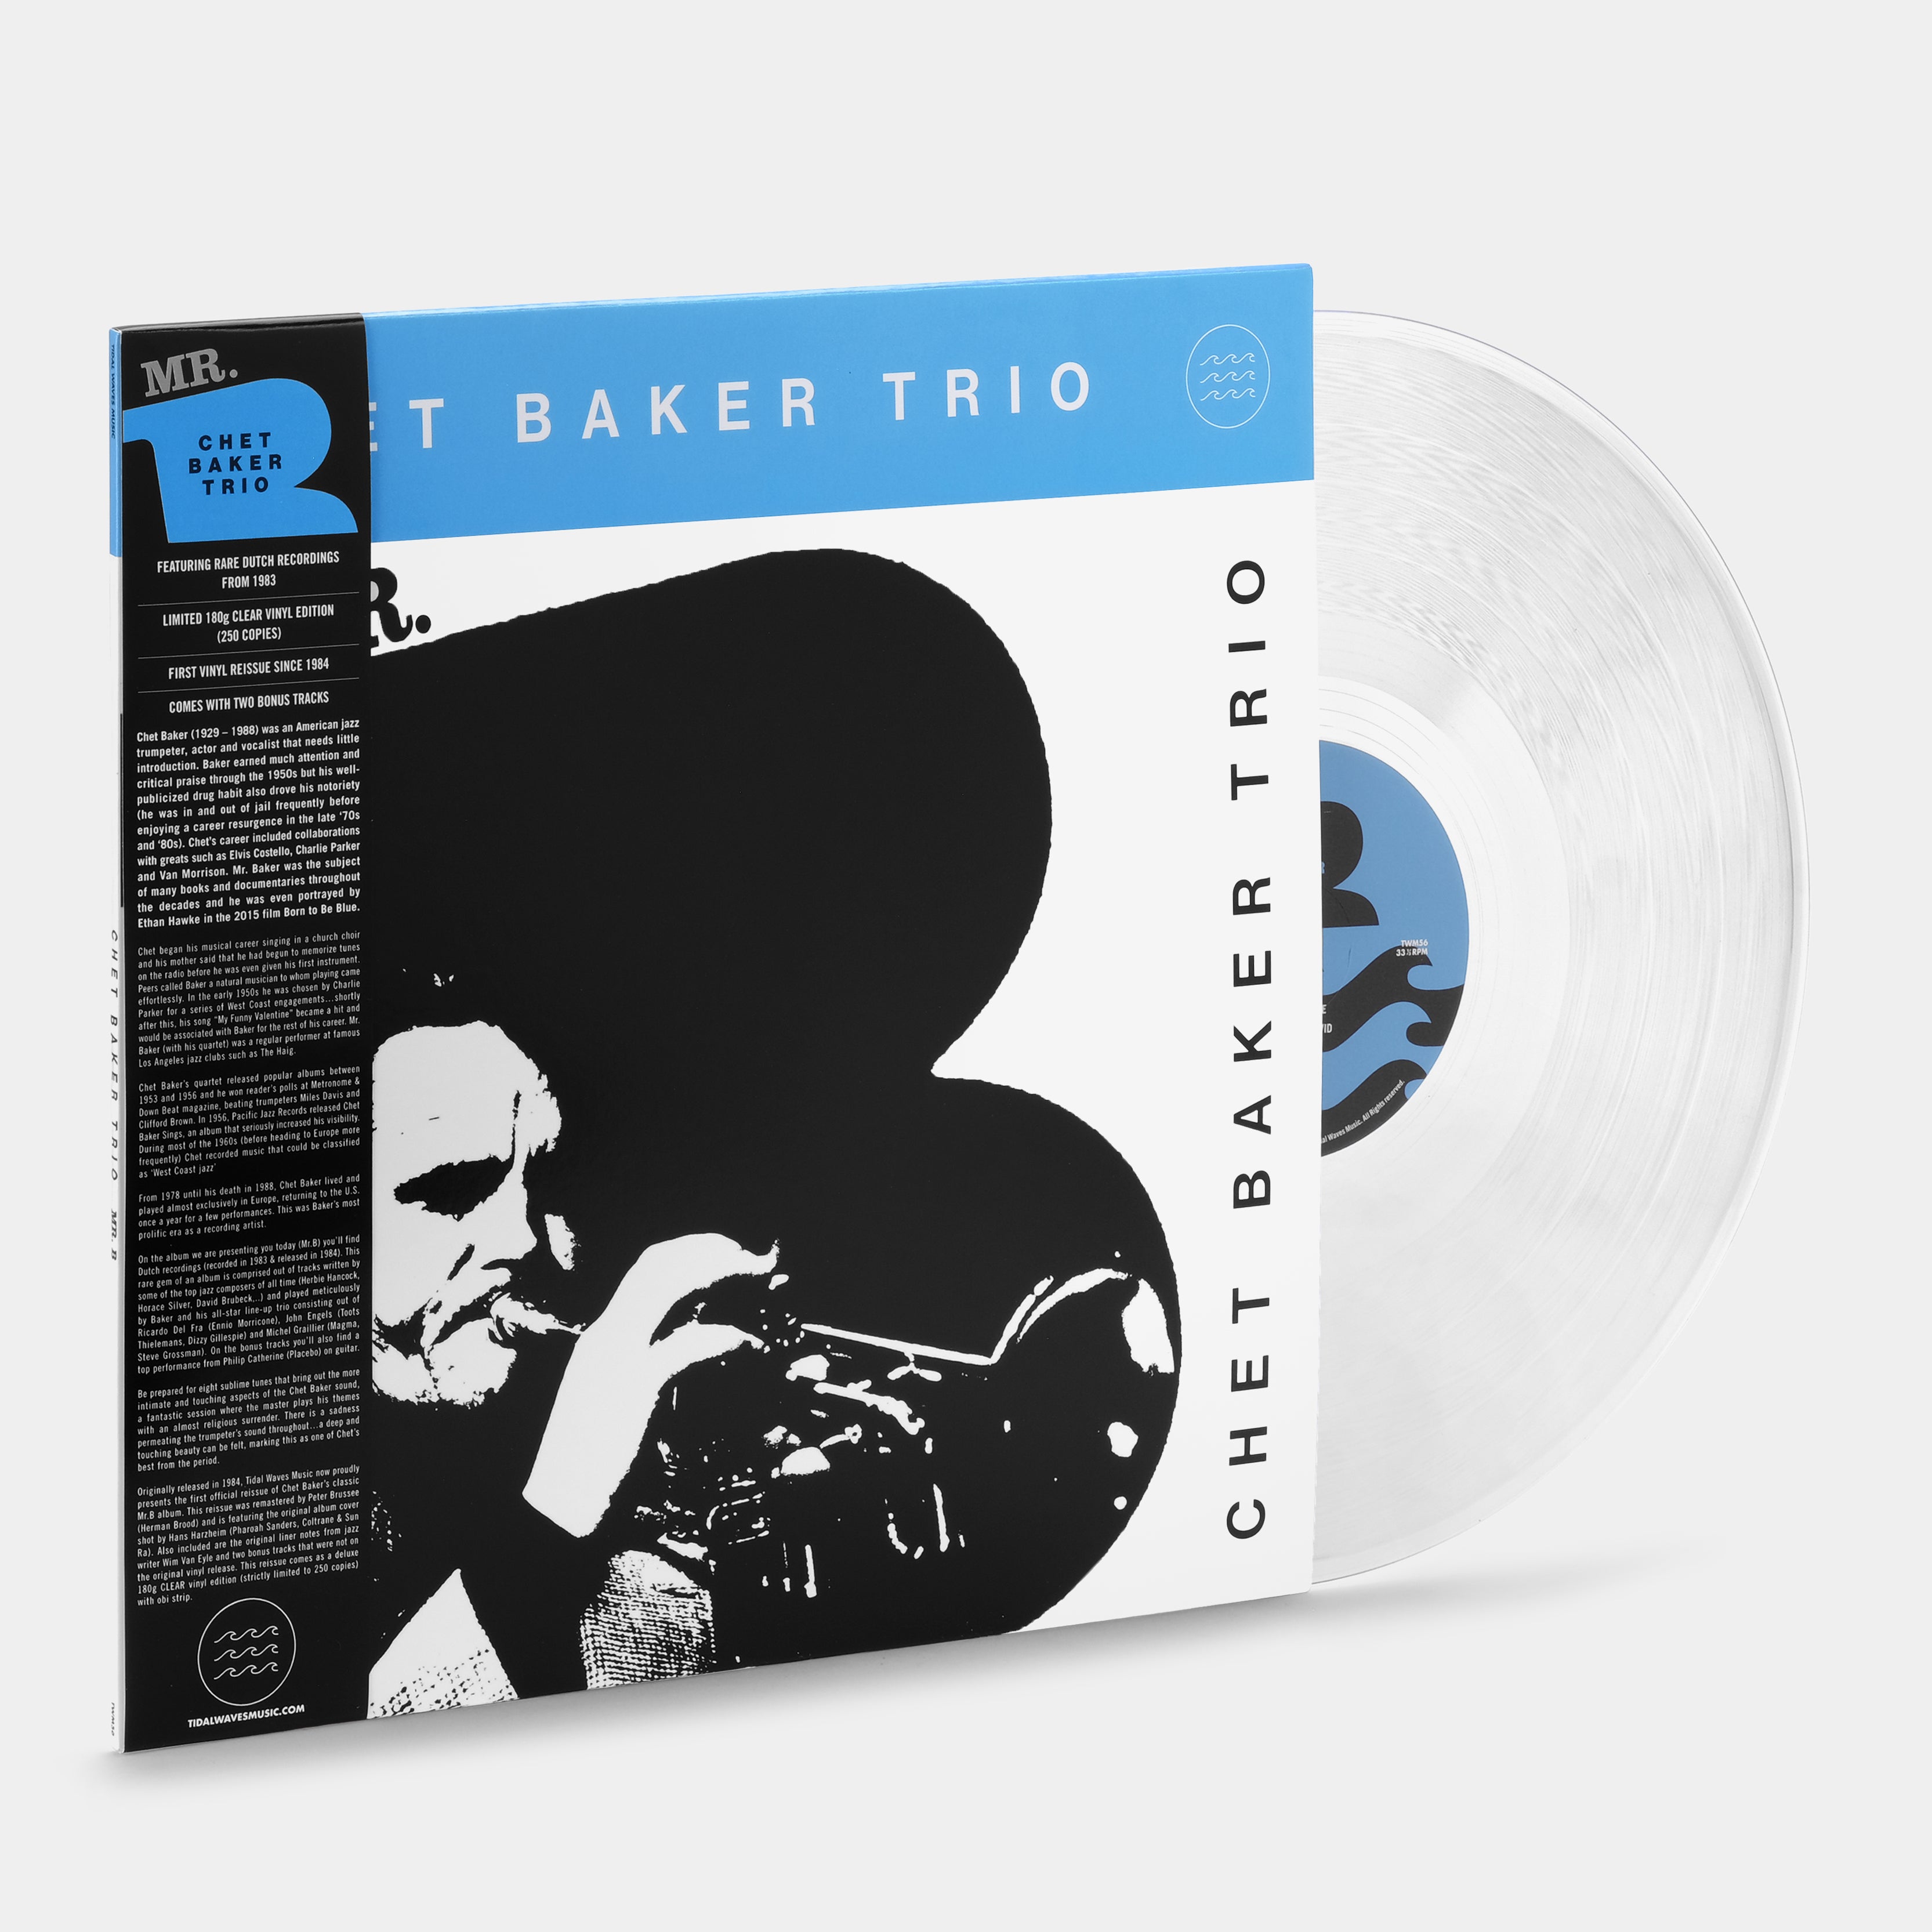 Chet Baker Trio - Mr. B LP Clear Vinyl Record